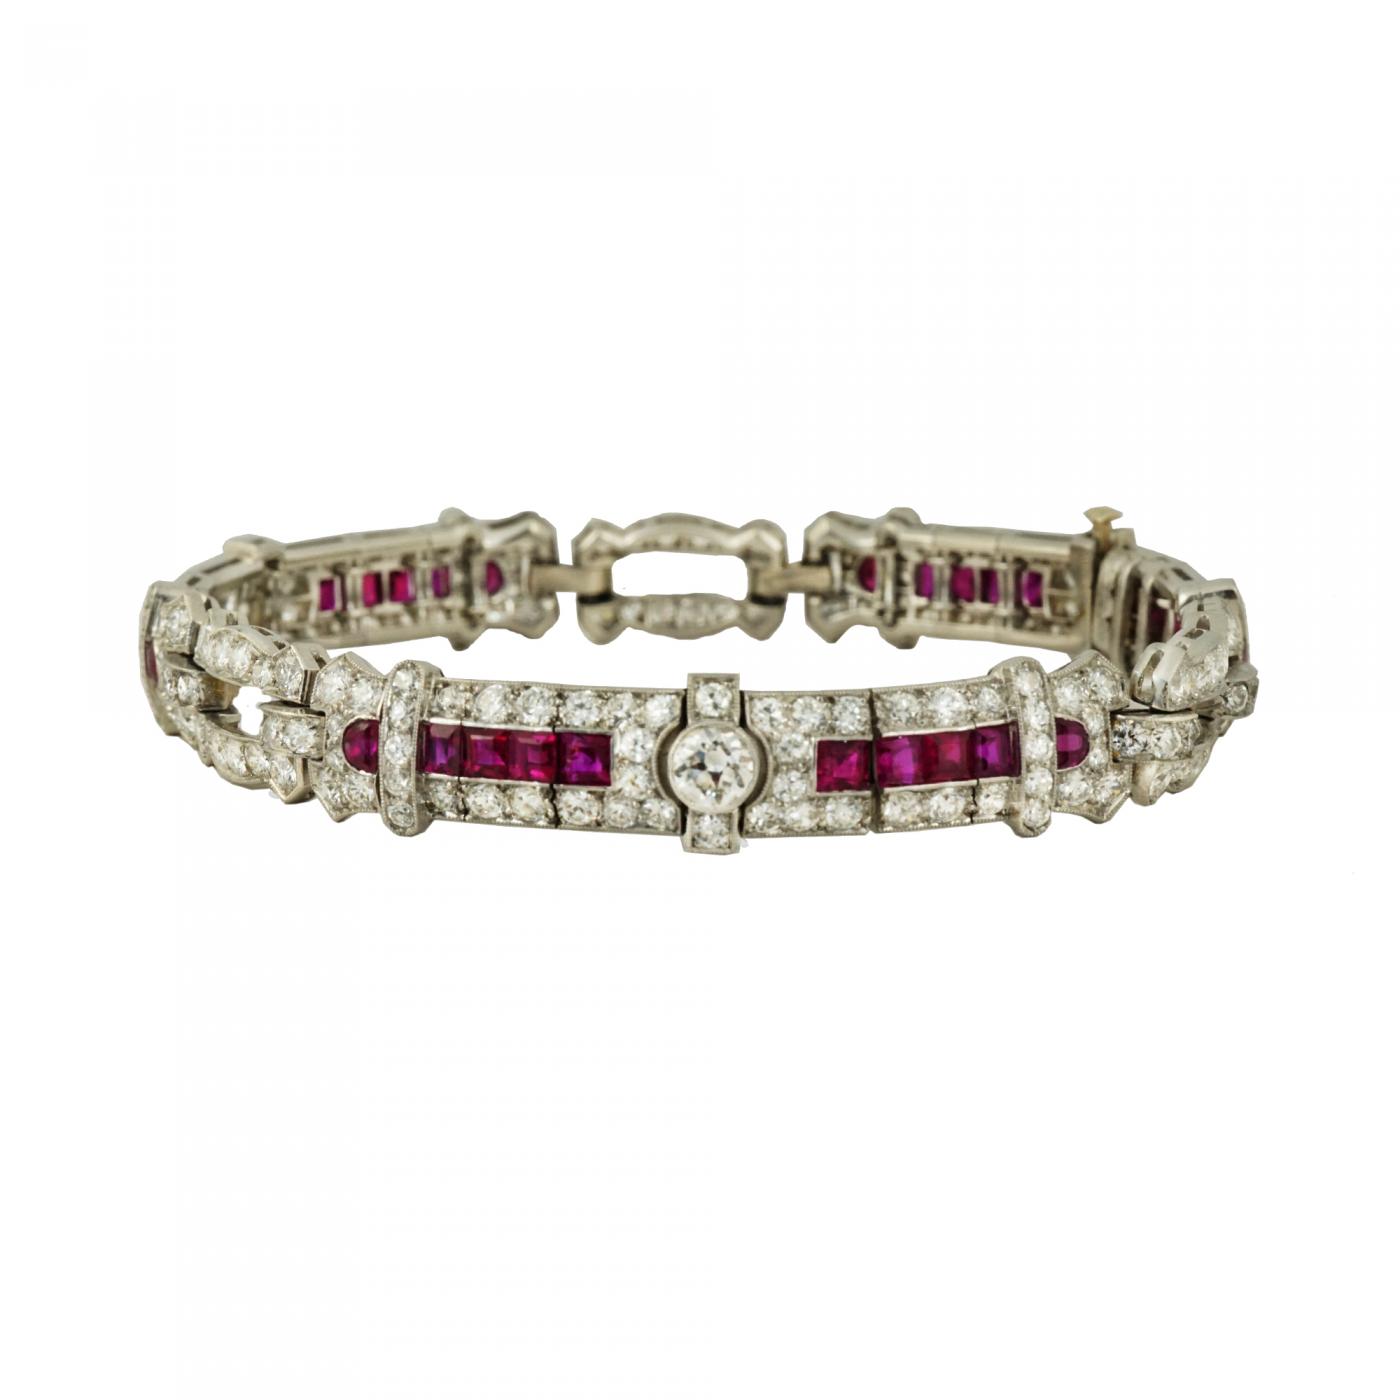 Tiffany & Co. Art Deco Diamond Bracelet